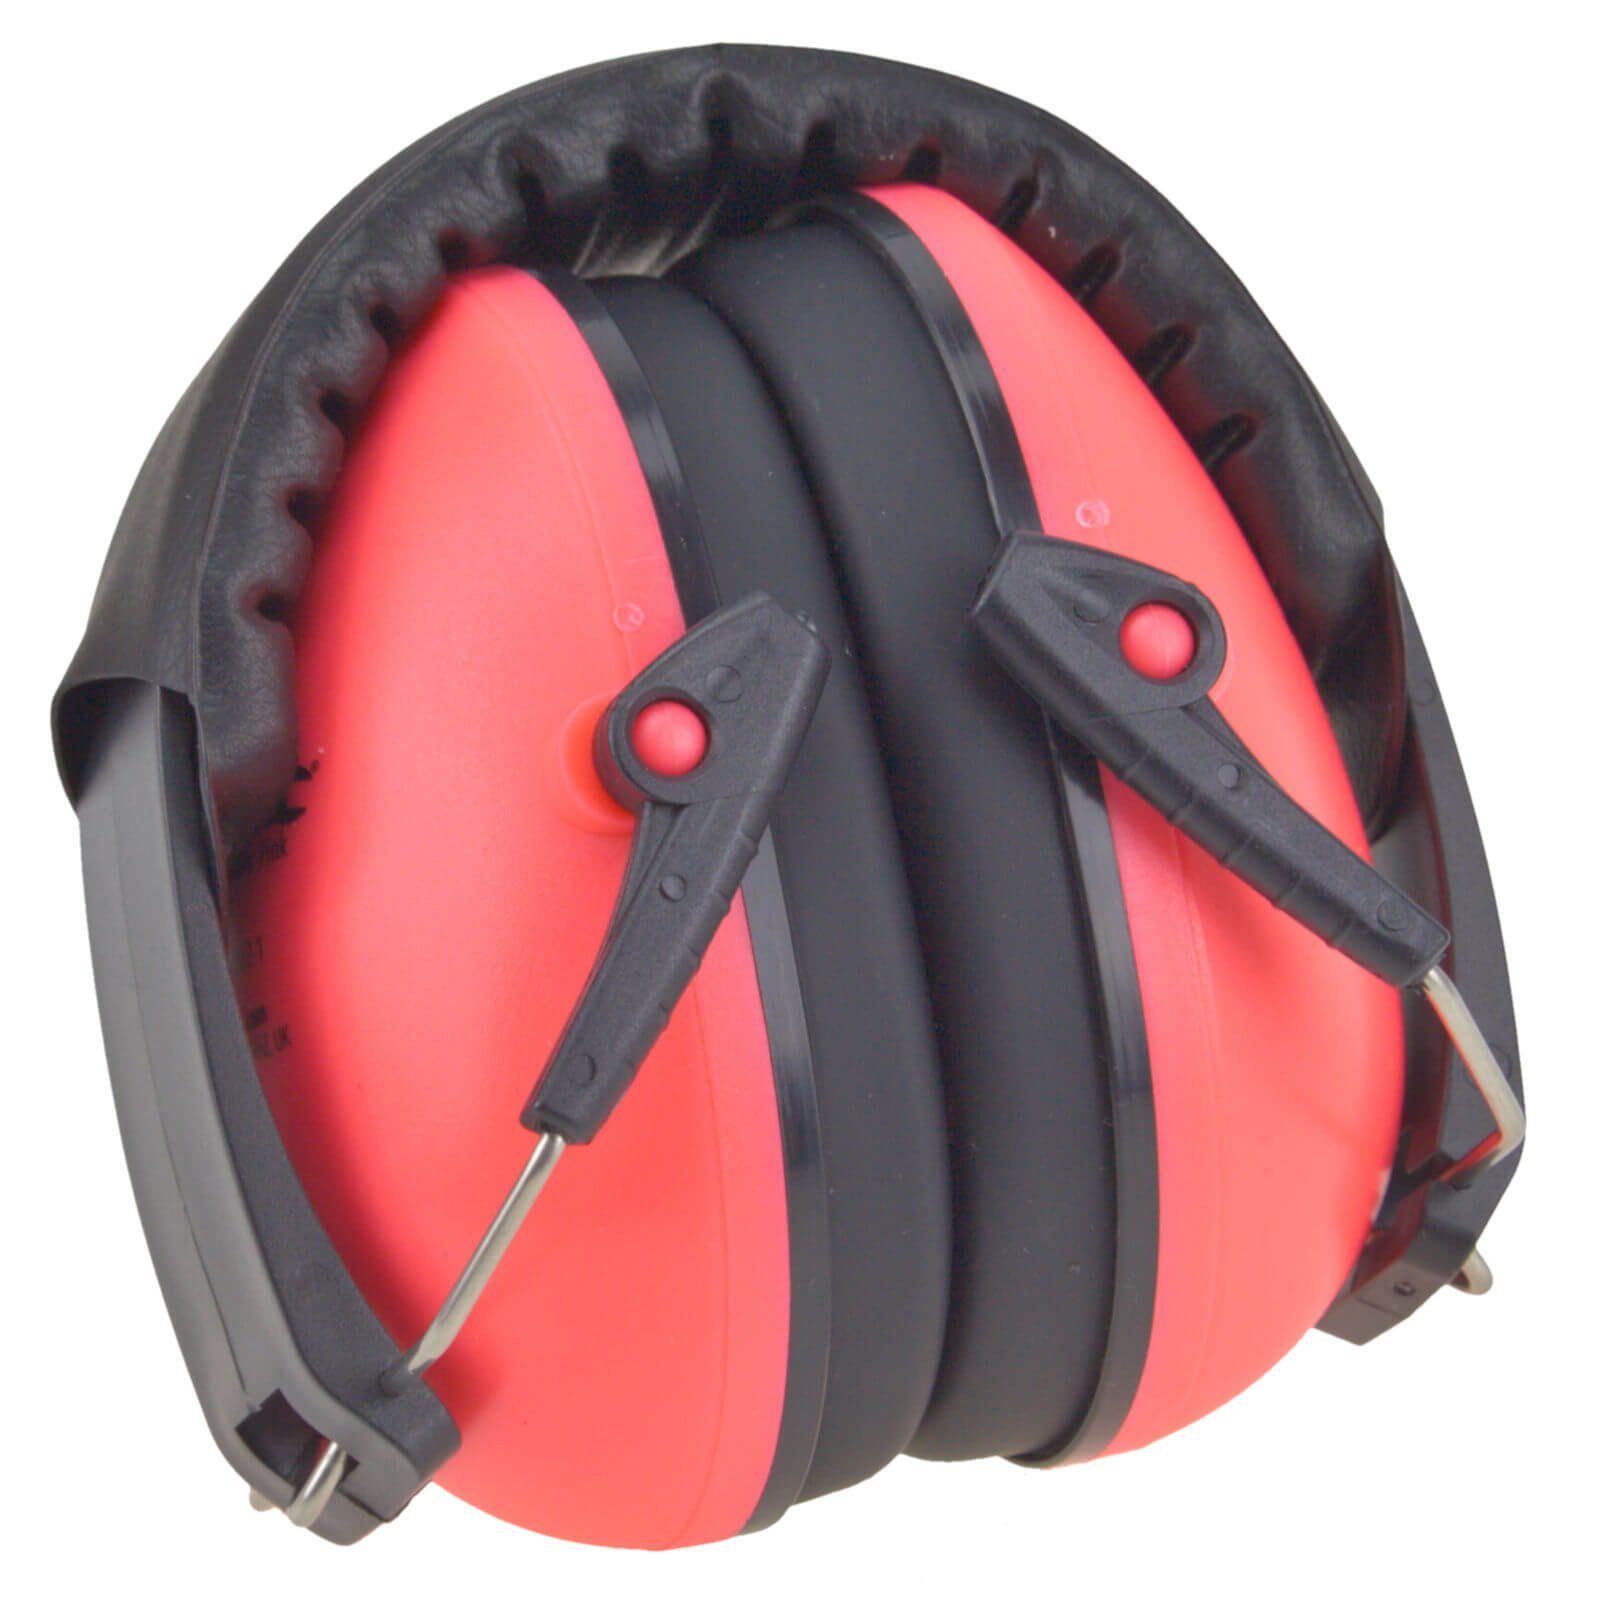 Silverline Kapselgehörschutz Kindergehörschutz pink Gehörschutz Ohrenschützer Kinder